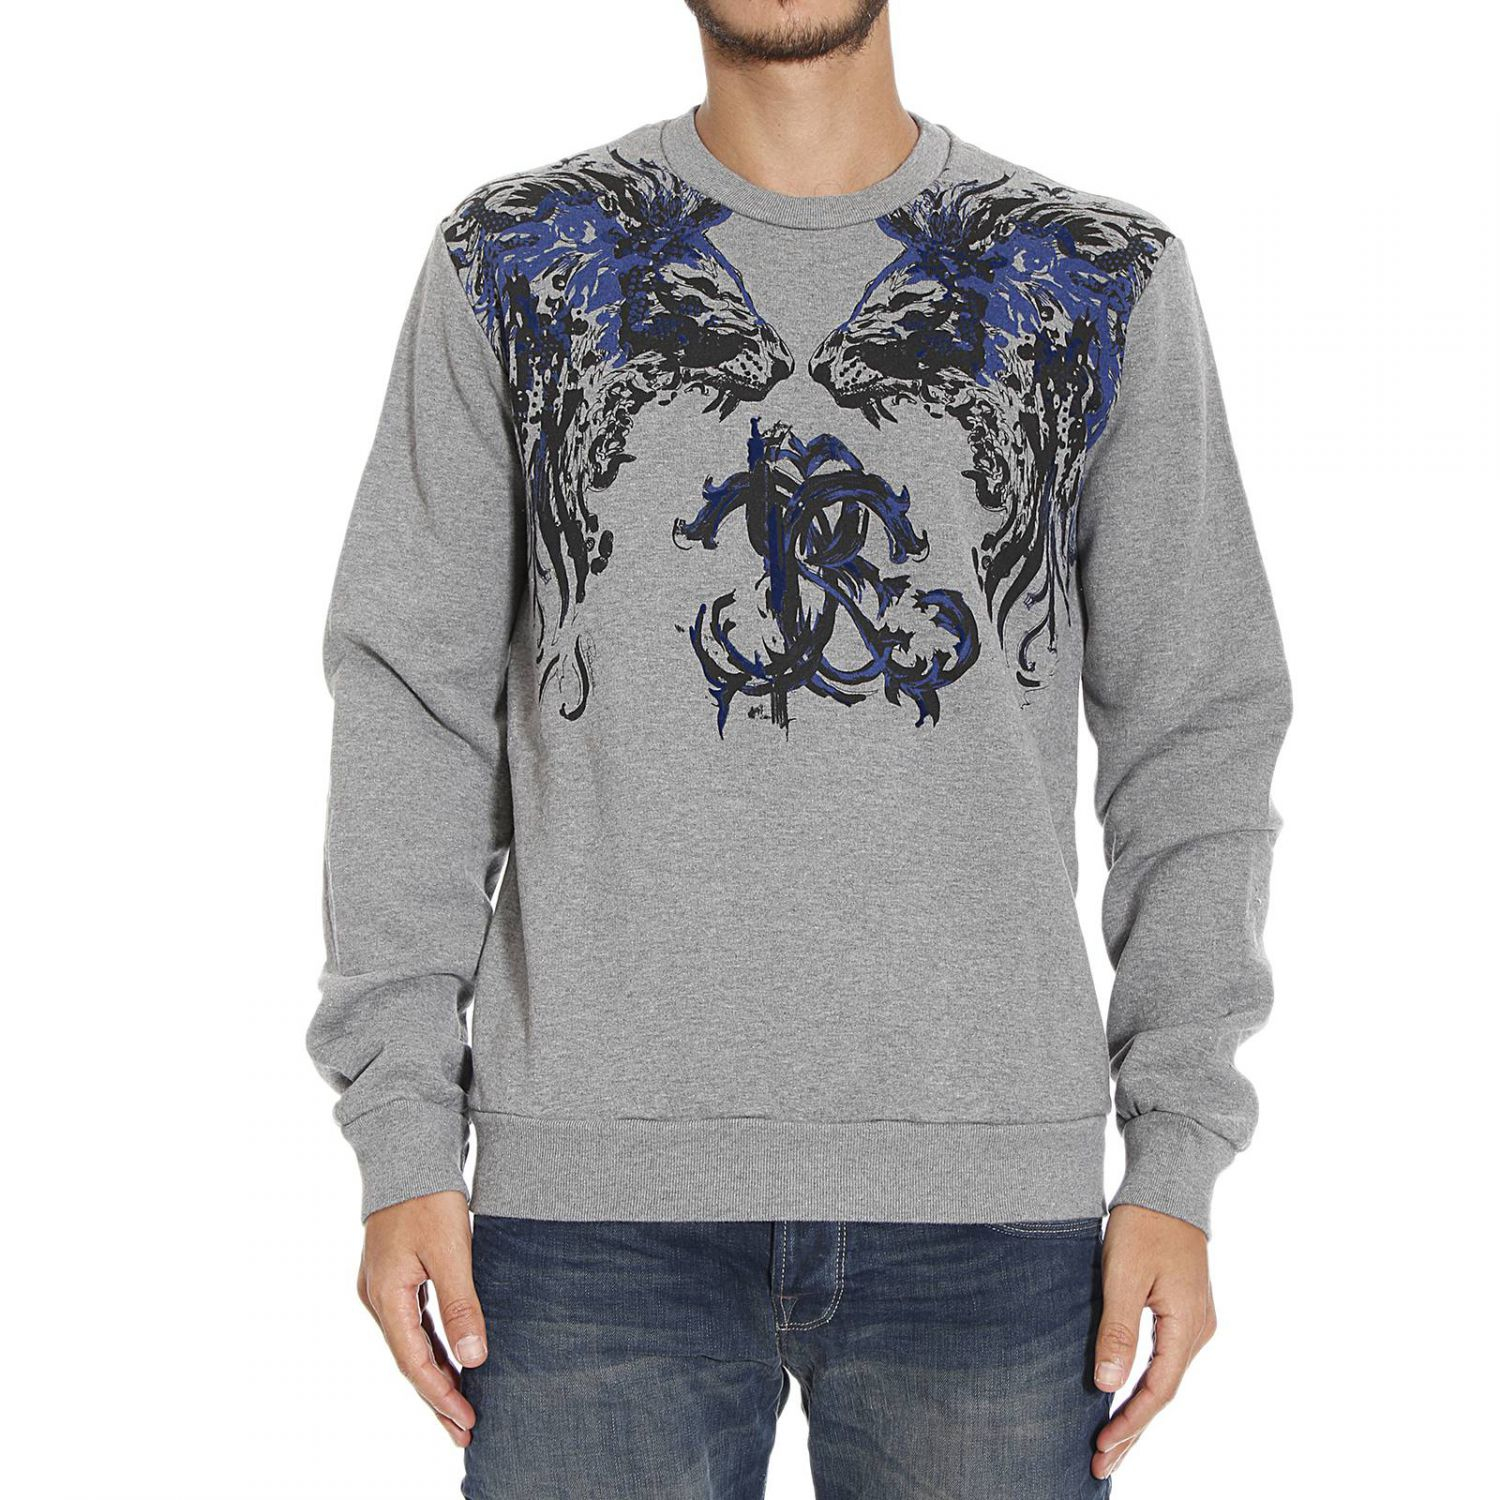 Lyst - Roberto Cavalli Sweater in Gray for Men